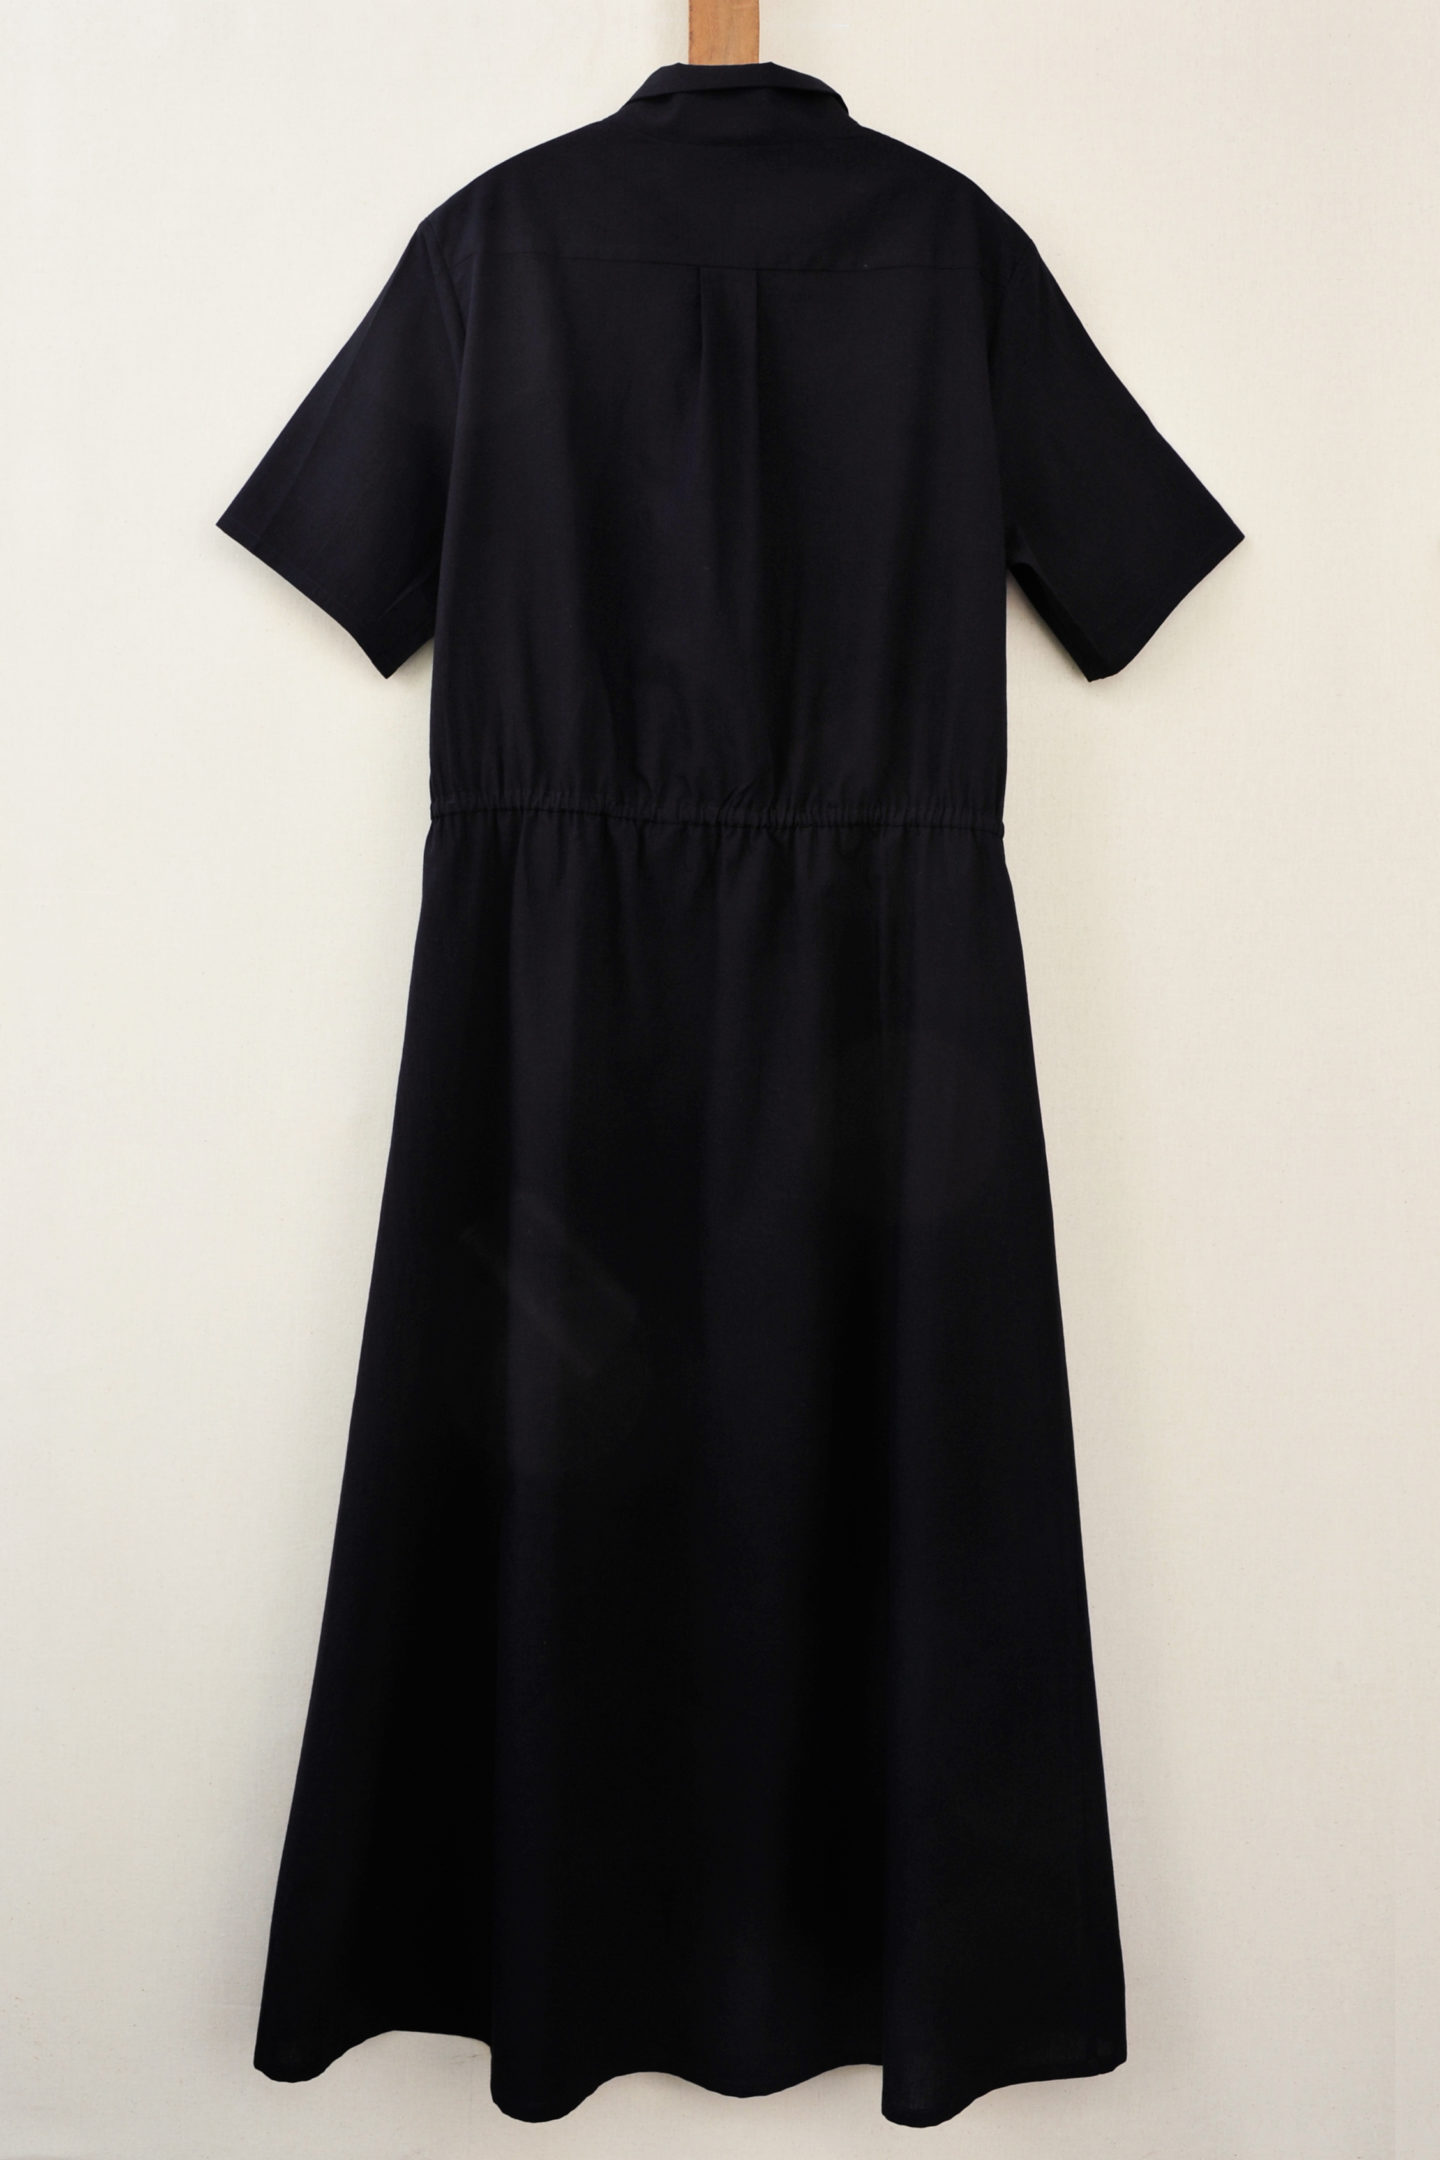 ROSA Dress #Black - Roxane Baines – Official website